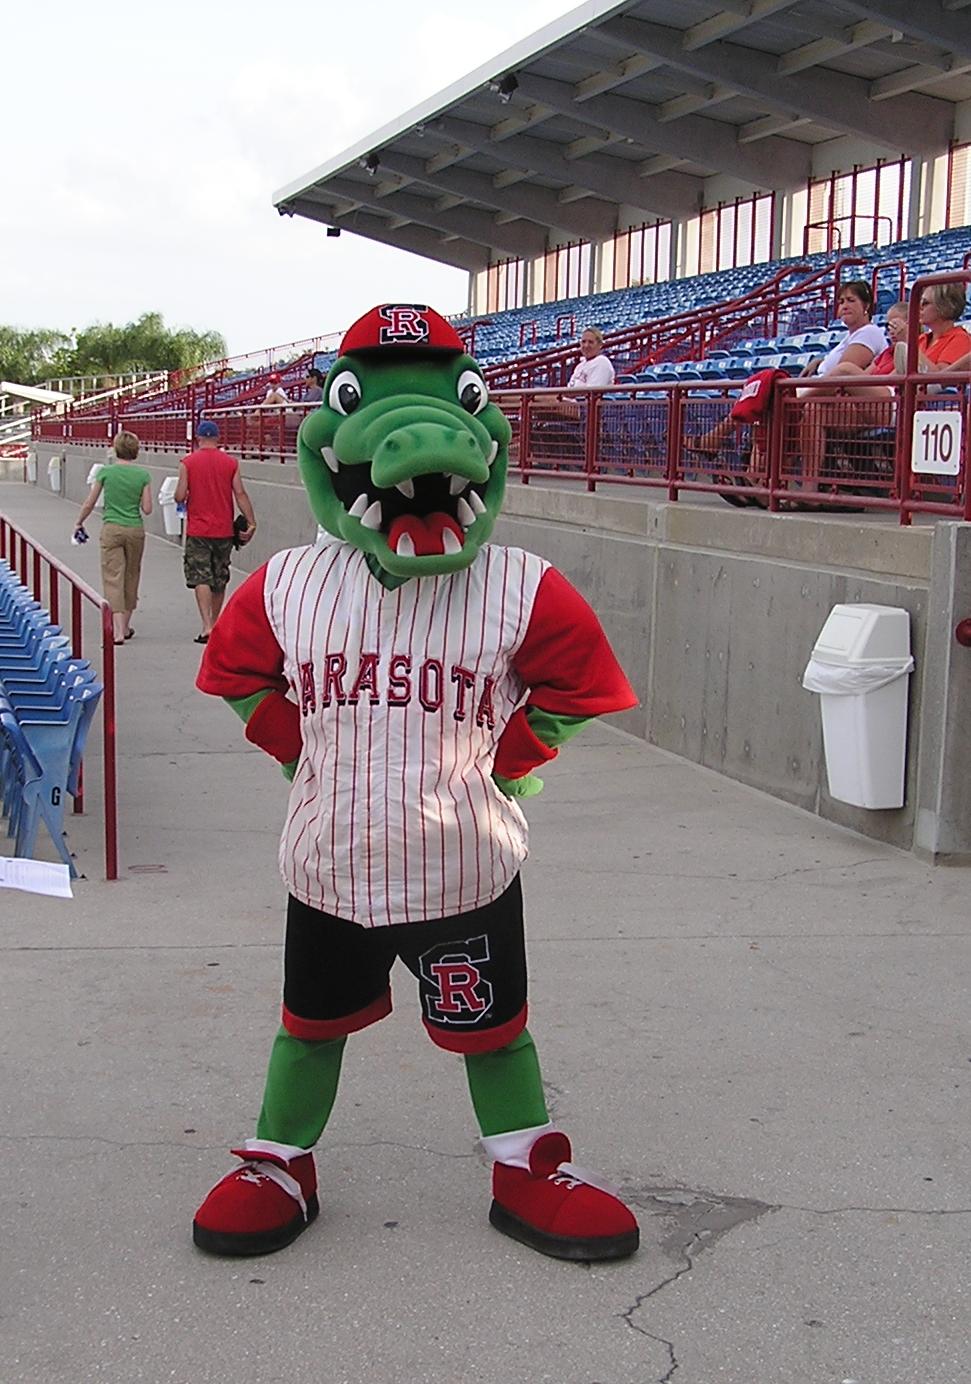 The Rally Gator, Sarasota's Excellent mascot